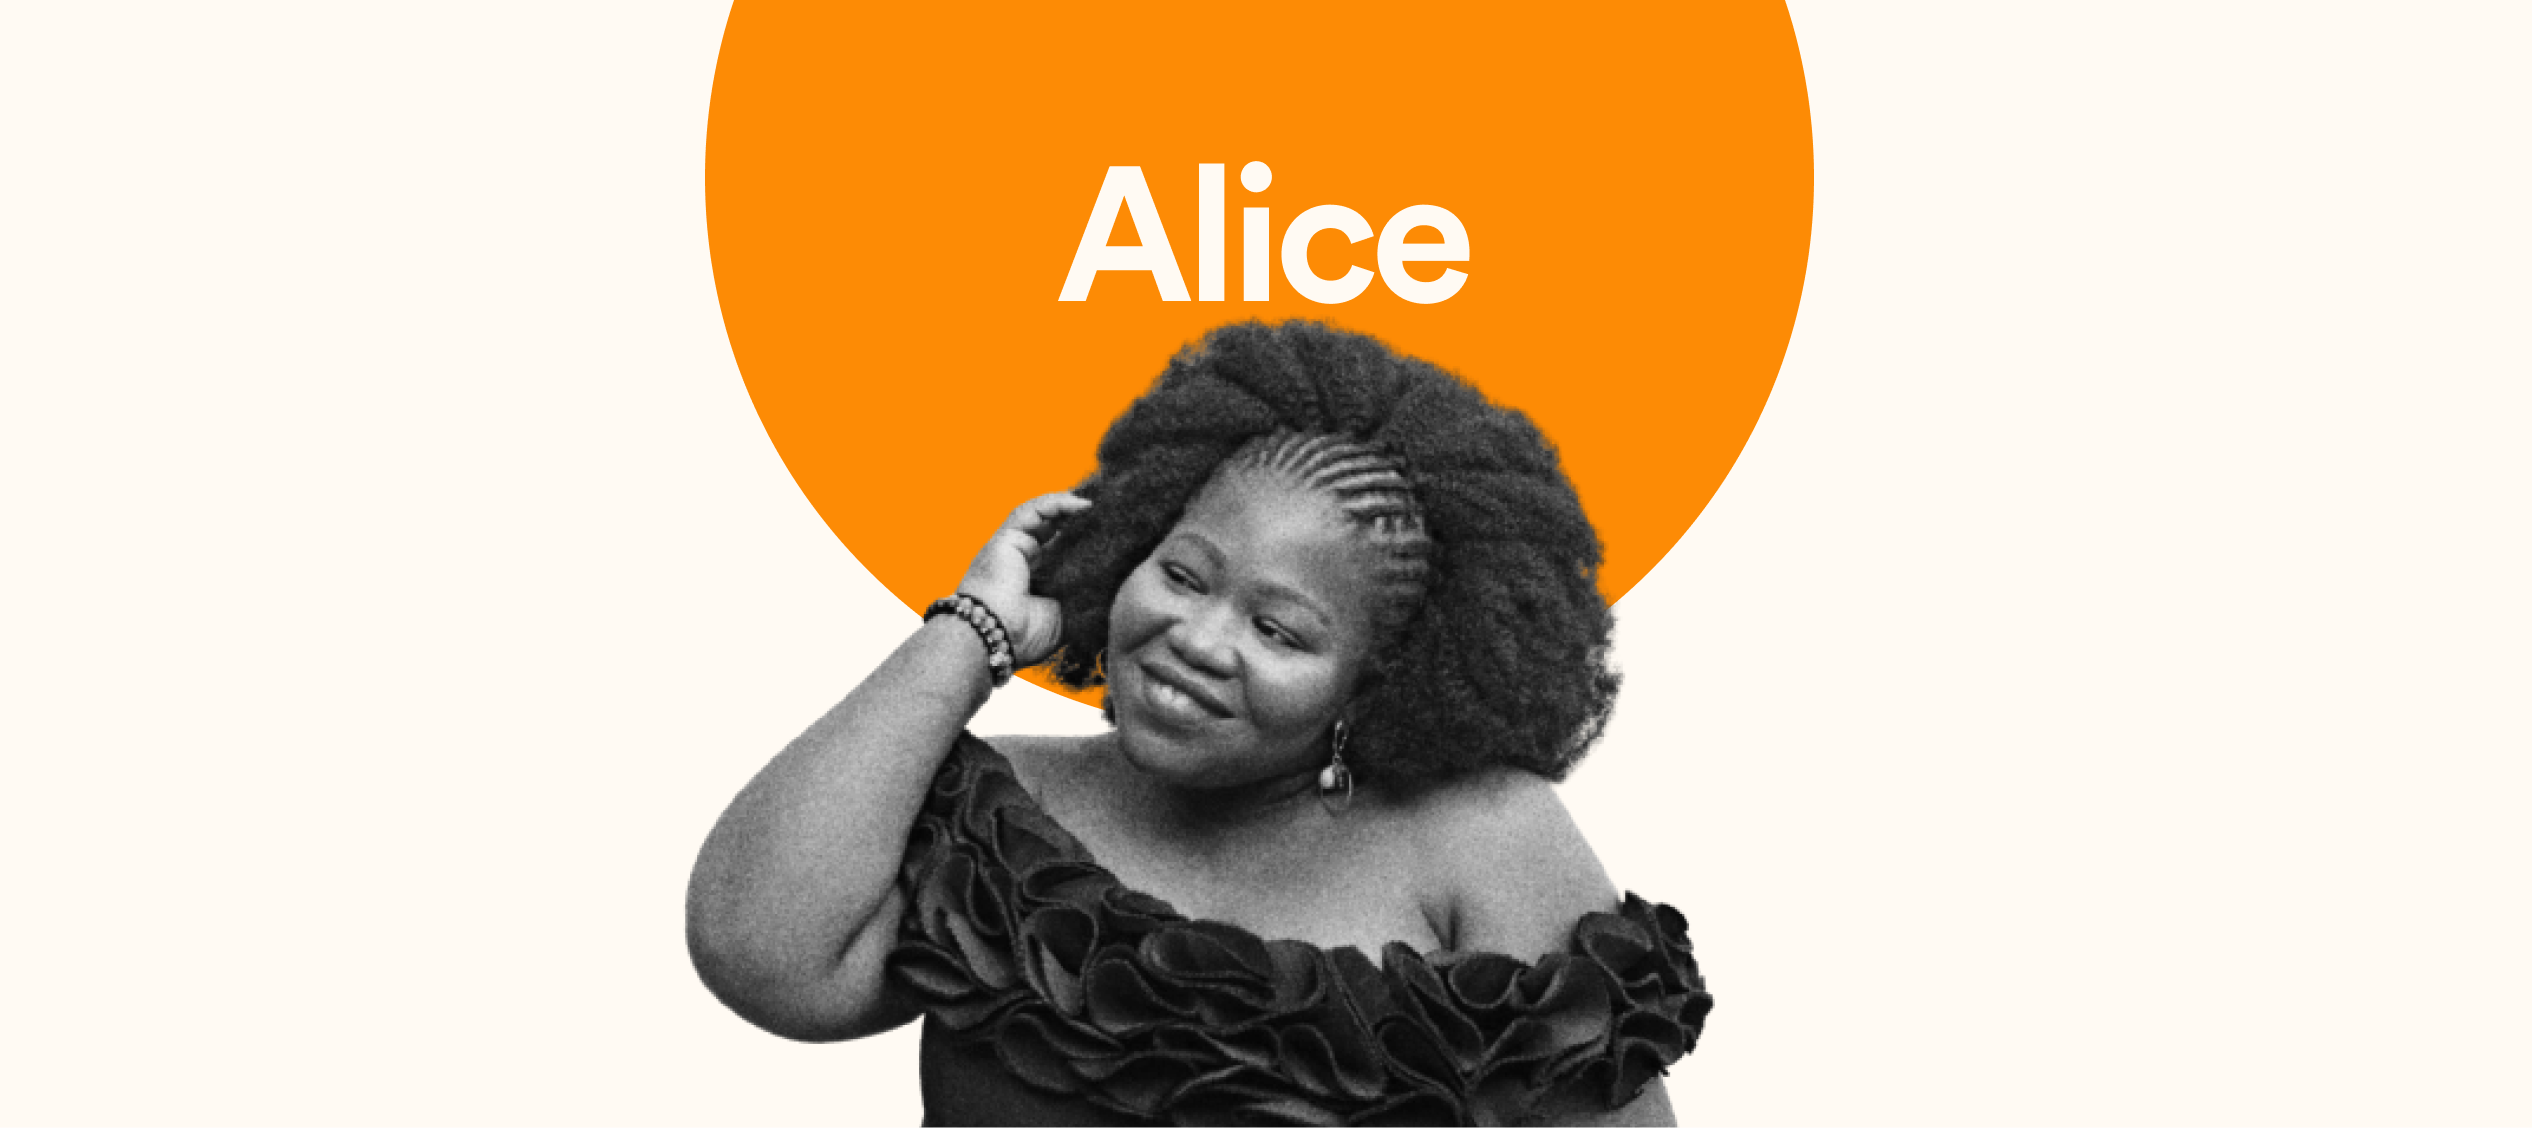 Alice’s Marketing Agency Is Empowering Creators In Africa